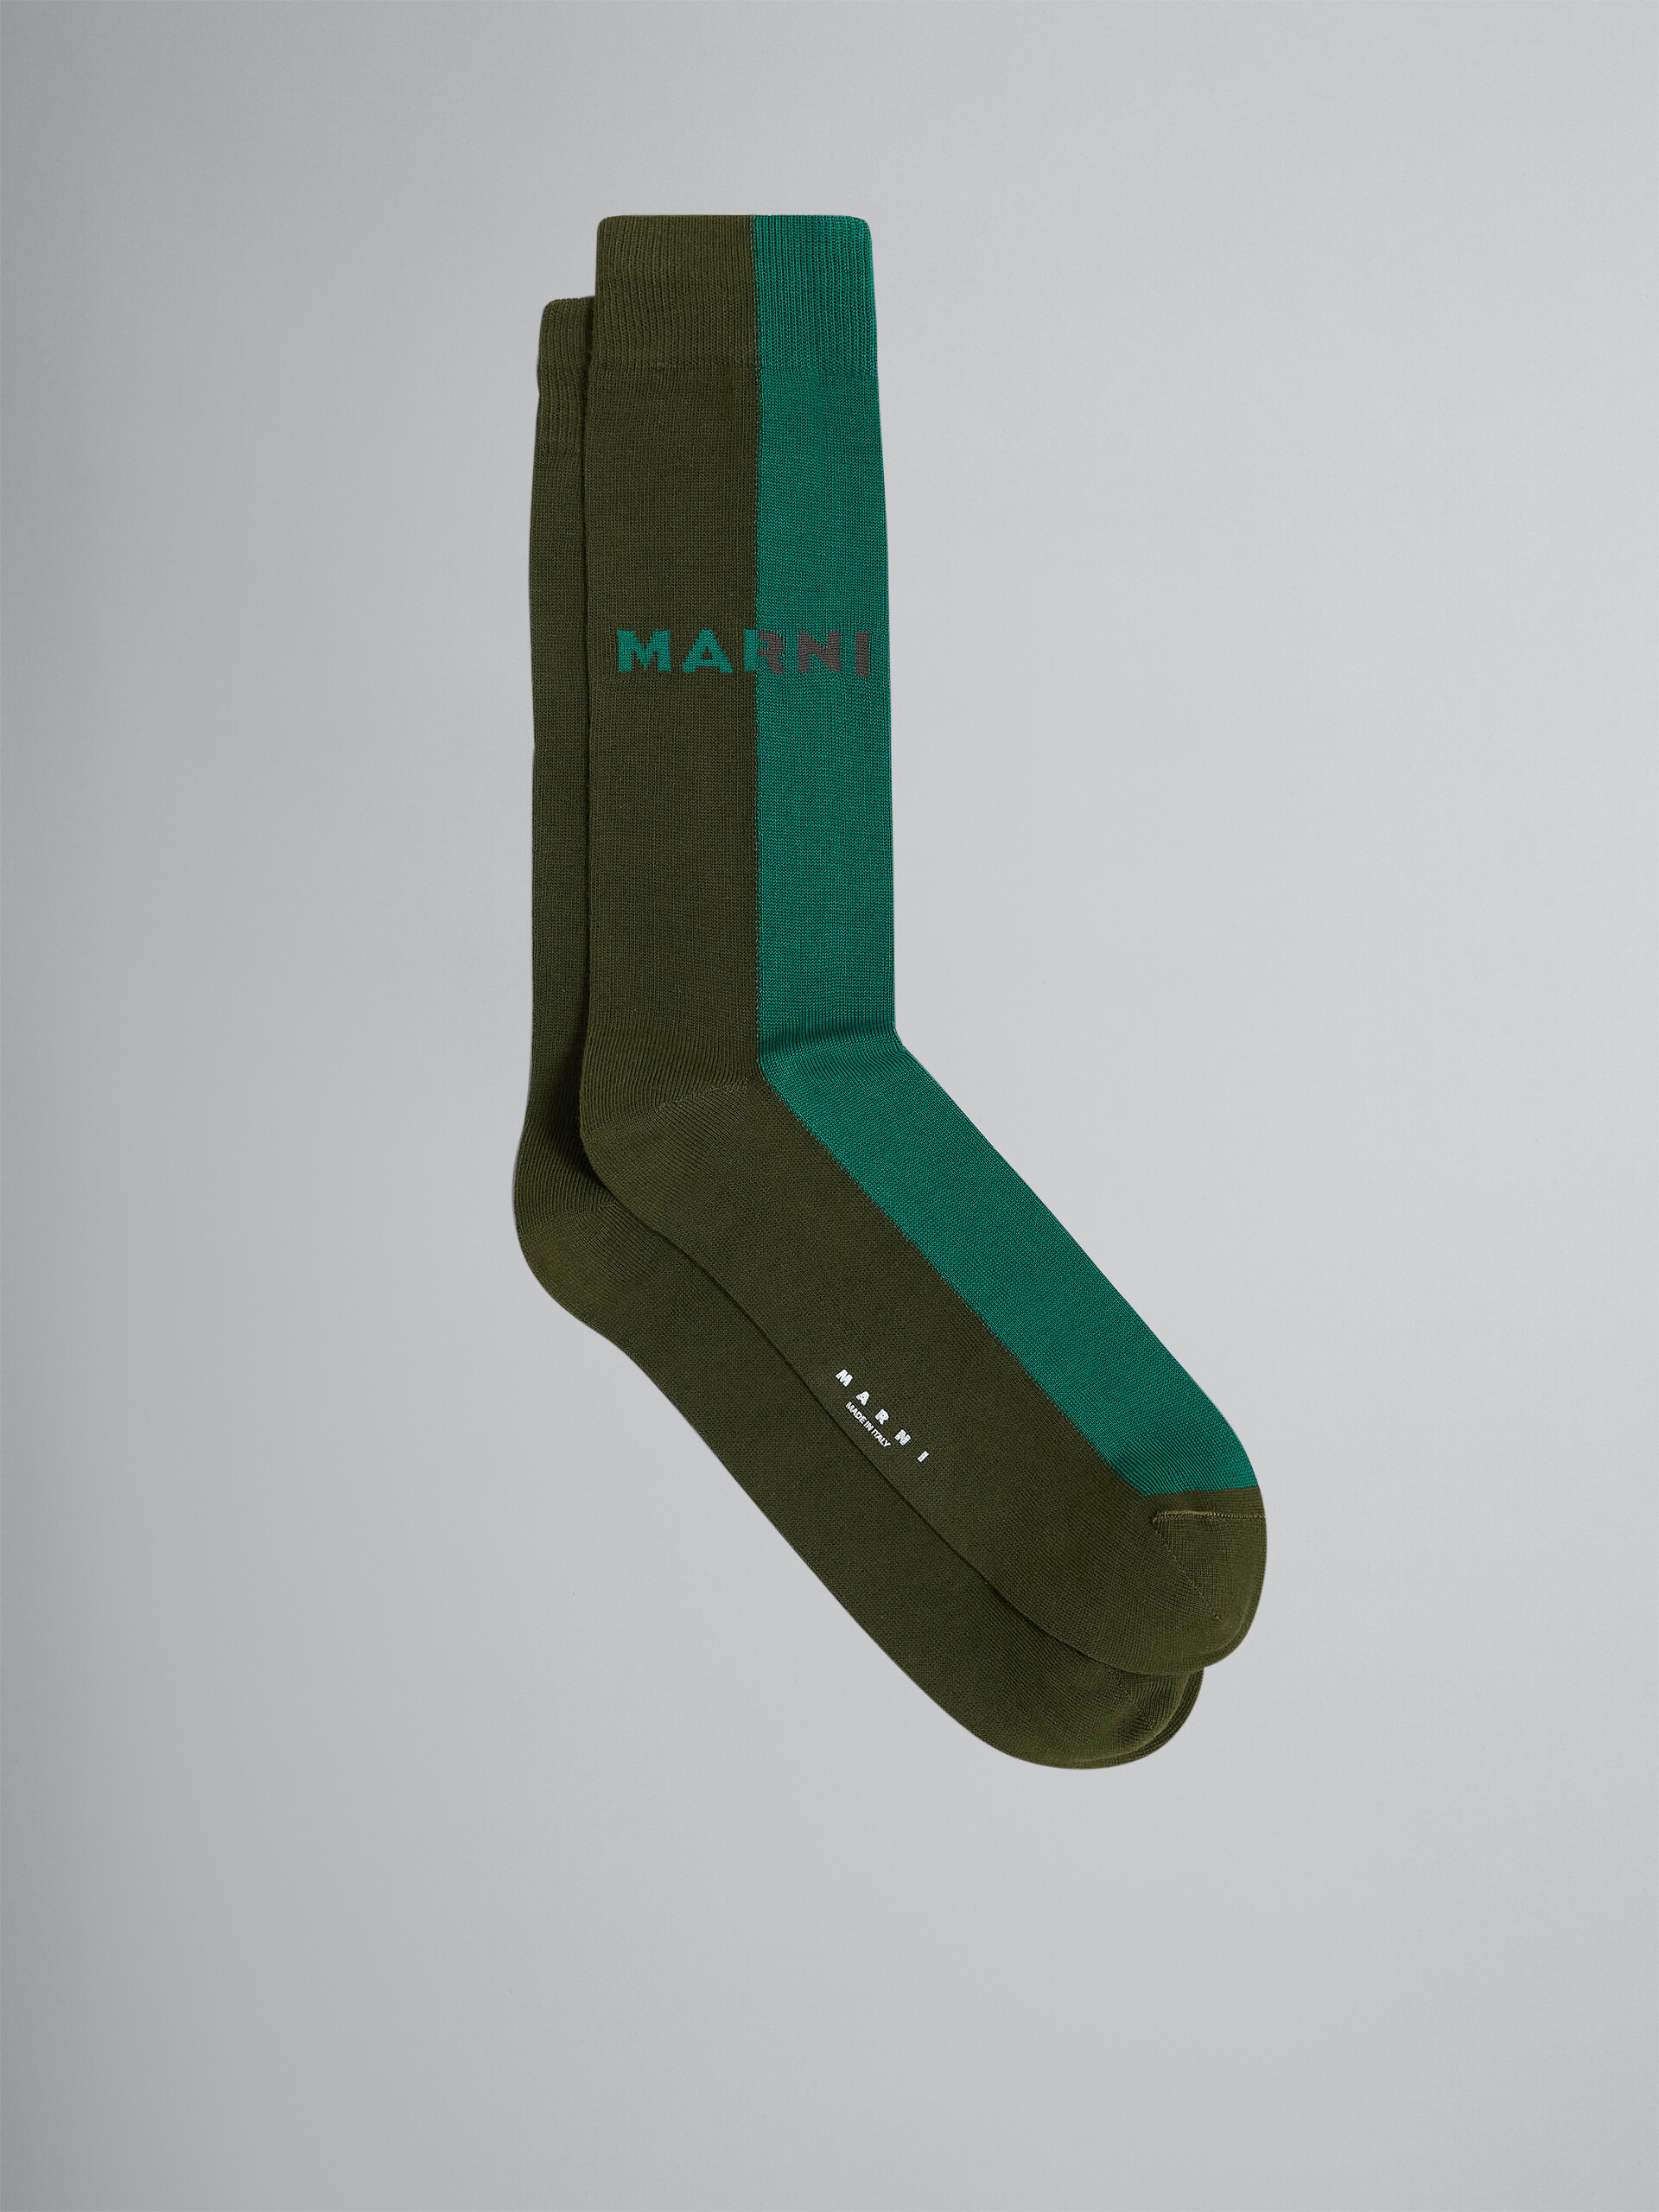 Green bi-coloured cotton and nylon socks - Socks - Image 1